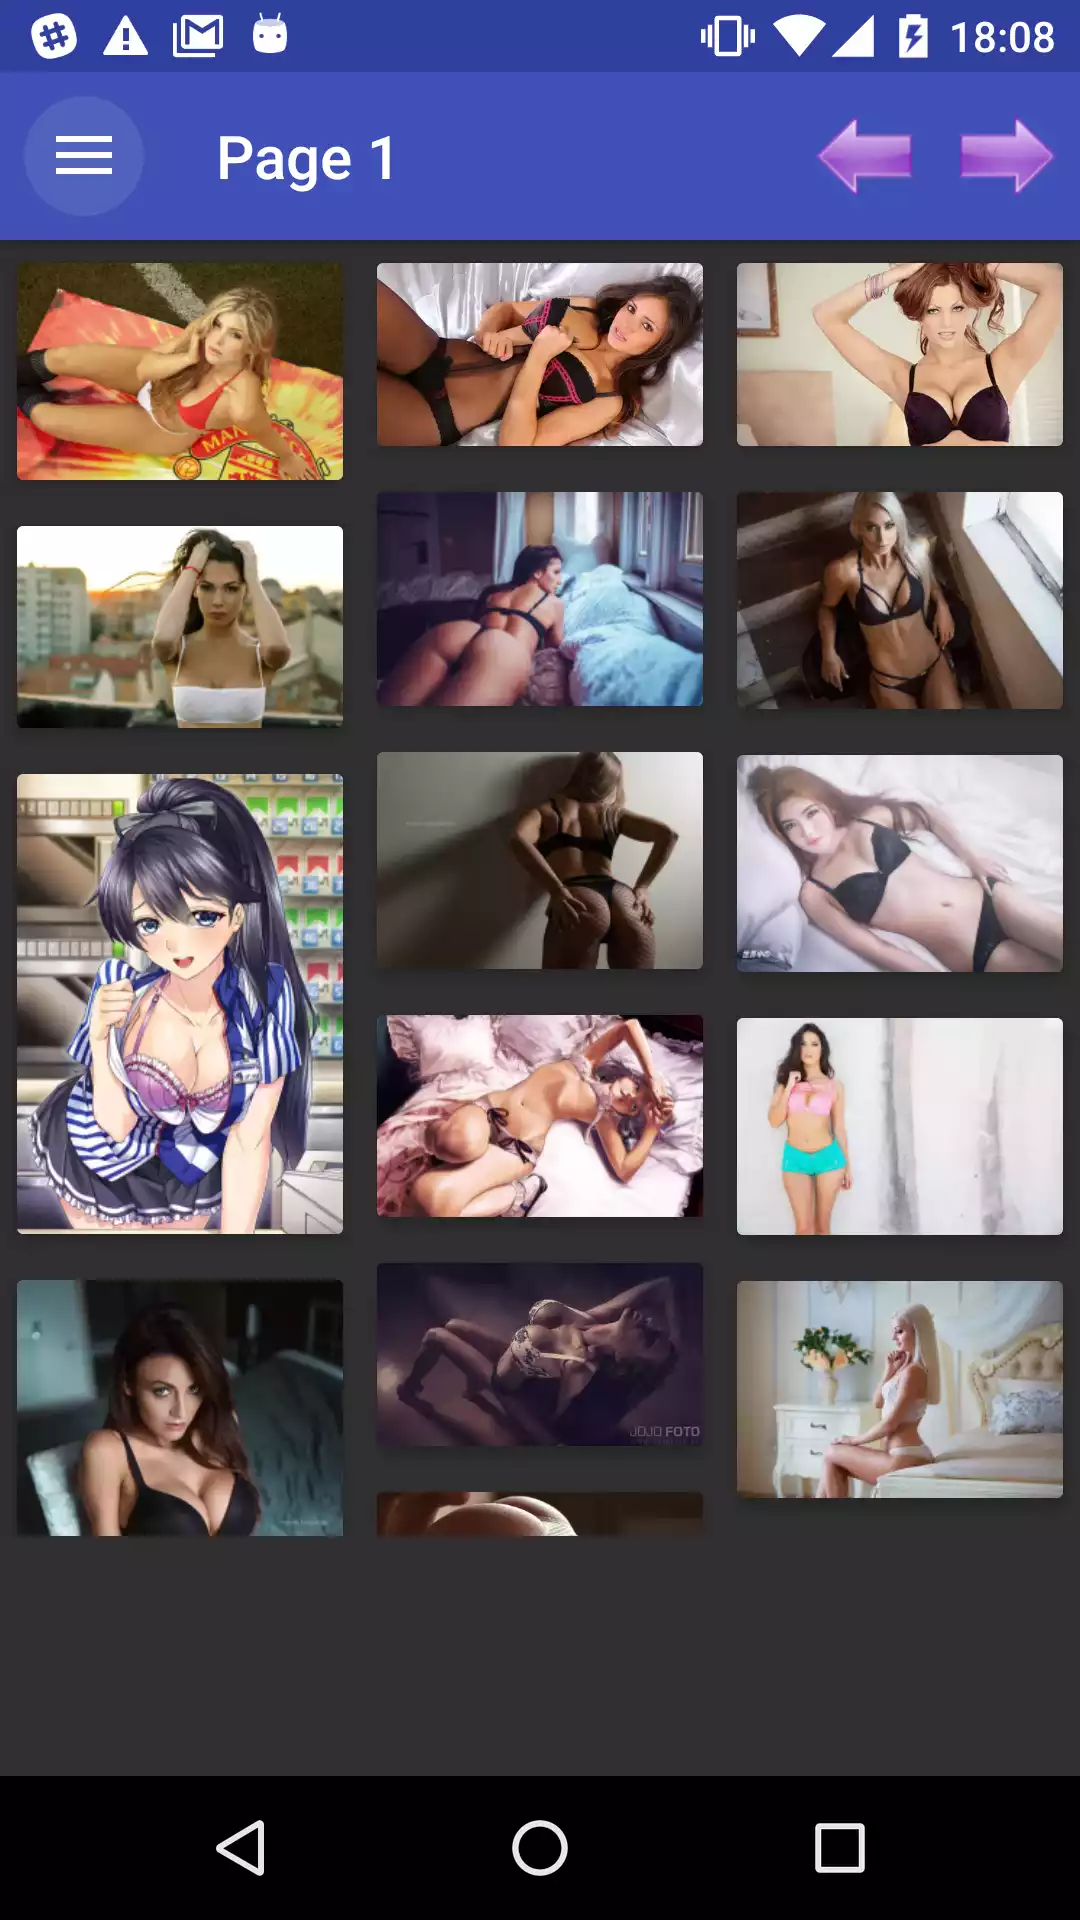 Bra Wallpapers pucs,apk,apps,download,photo,edit,hentai,pornstar,comixharem,porn,ebony,backgrounds,sexy,picturd,photos,best,gallery,wallpapers,henati,app,pics,pic,application,new